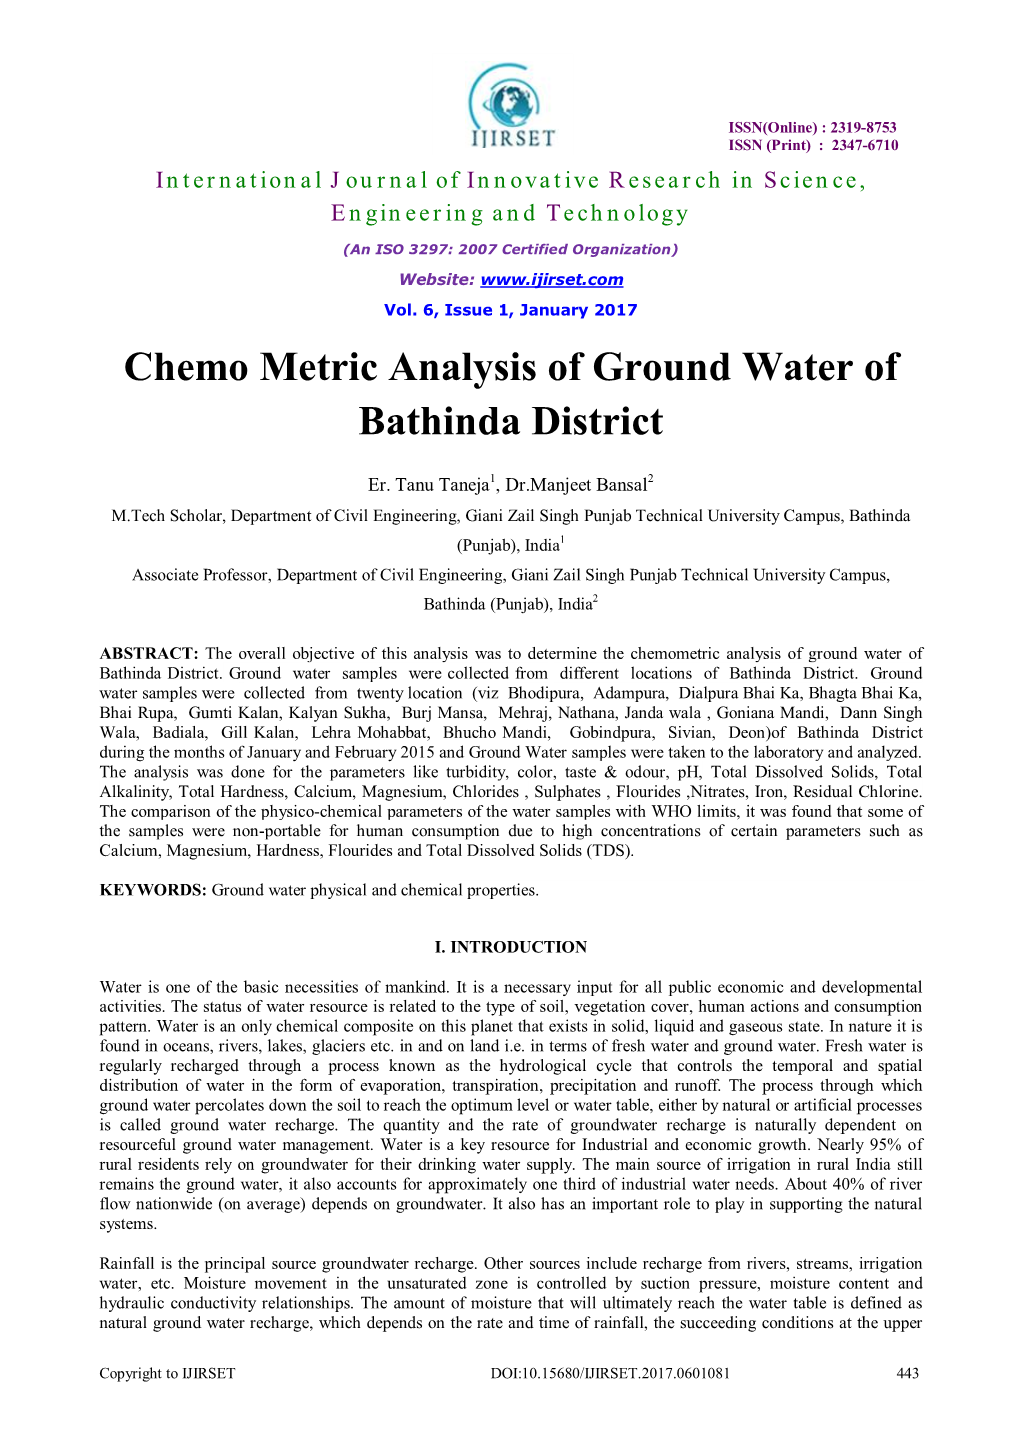 Chemo Metric Analysis of Ground Water of Bathinda District